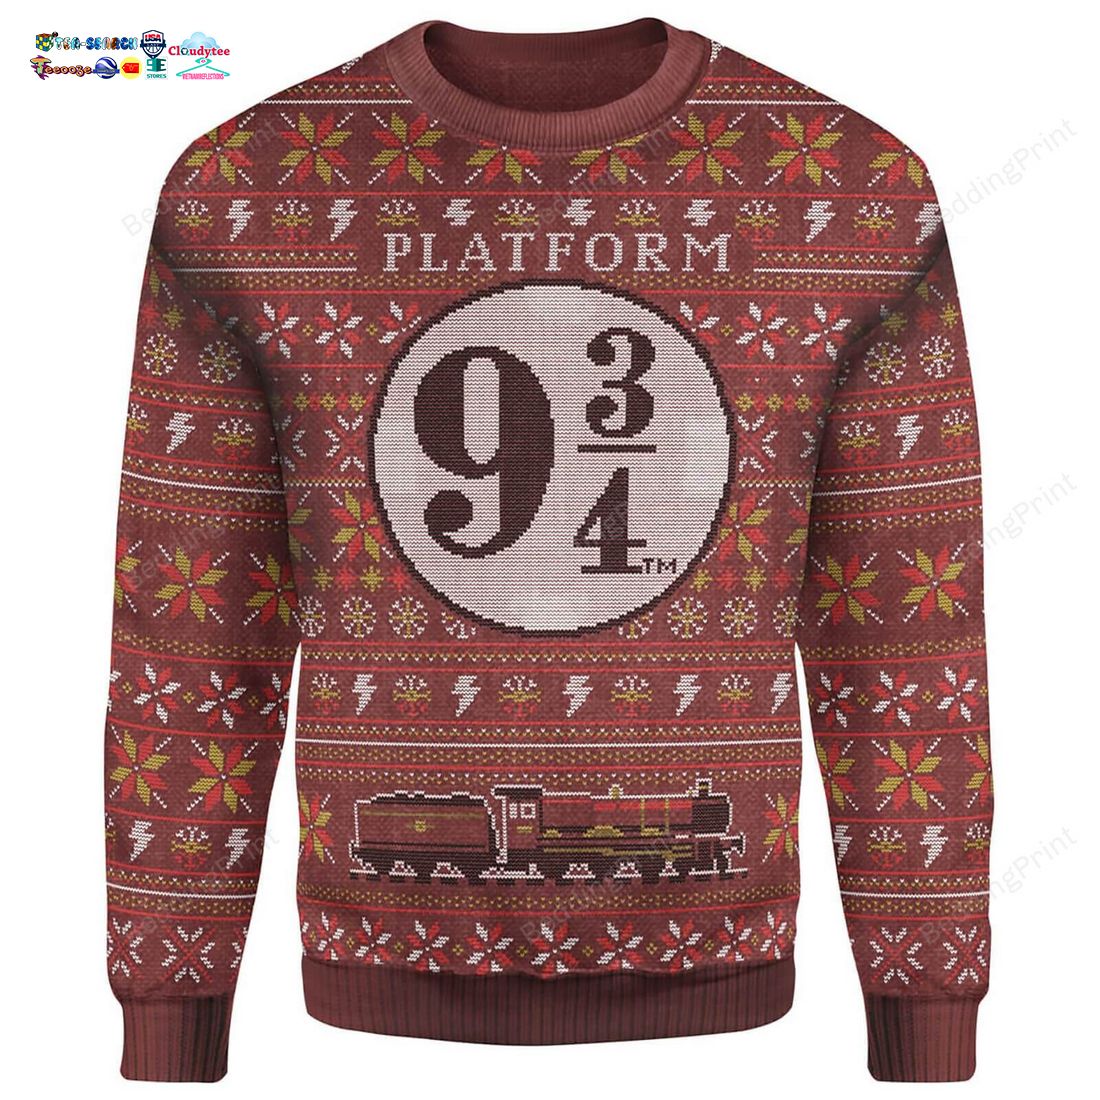 harry-potter-platform-nine-and-three-quarters-ugly-christmas-sweater-1-l9iYy.jpg